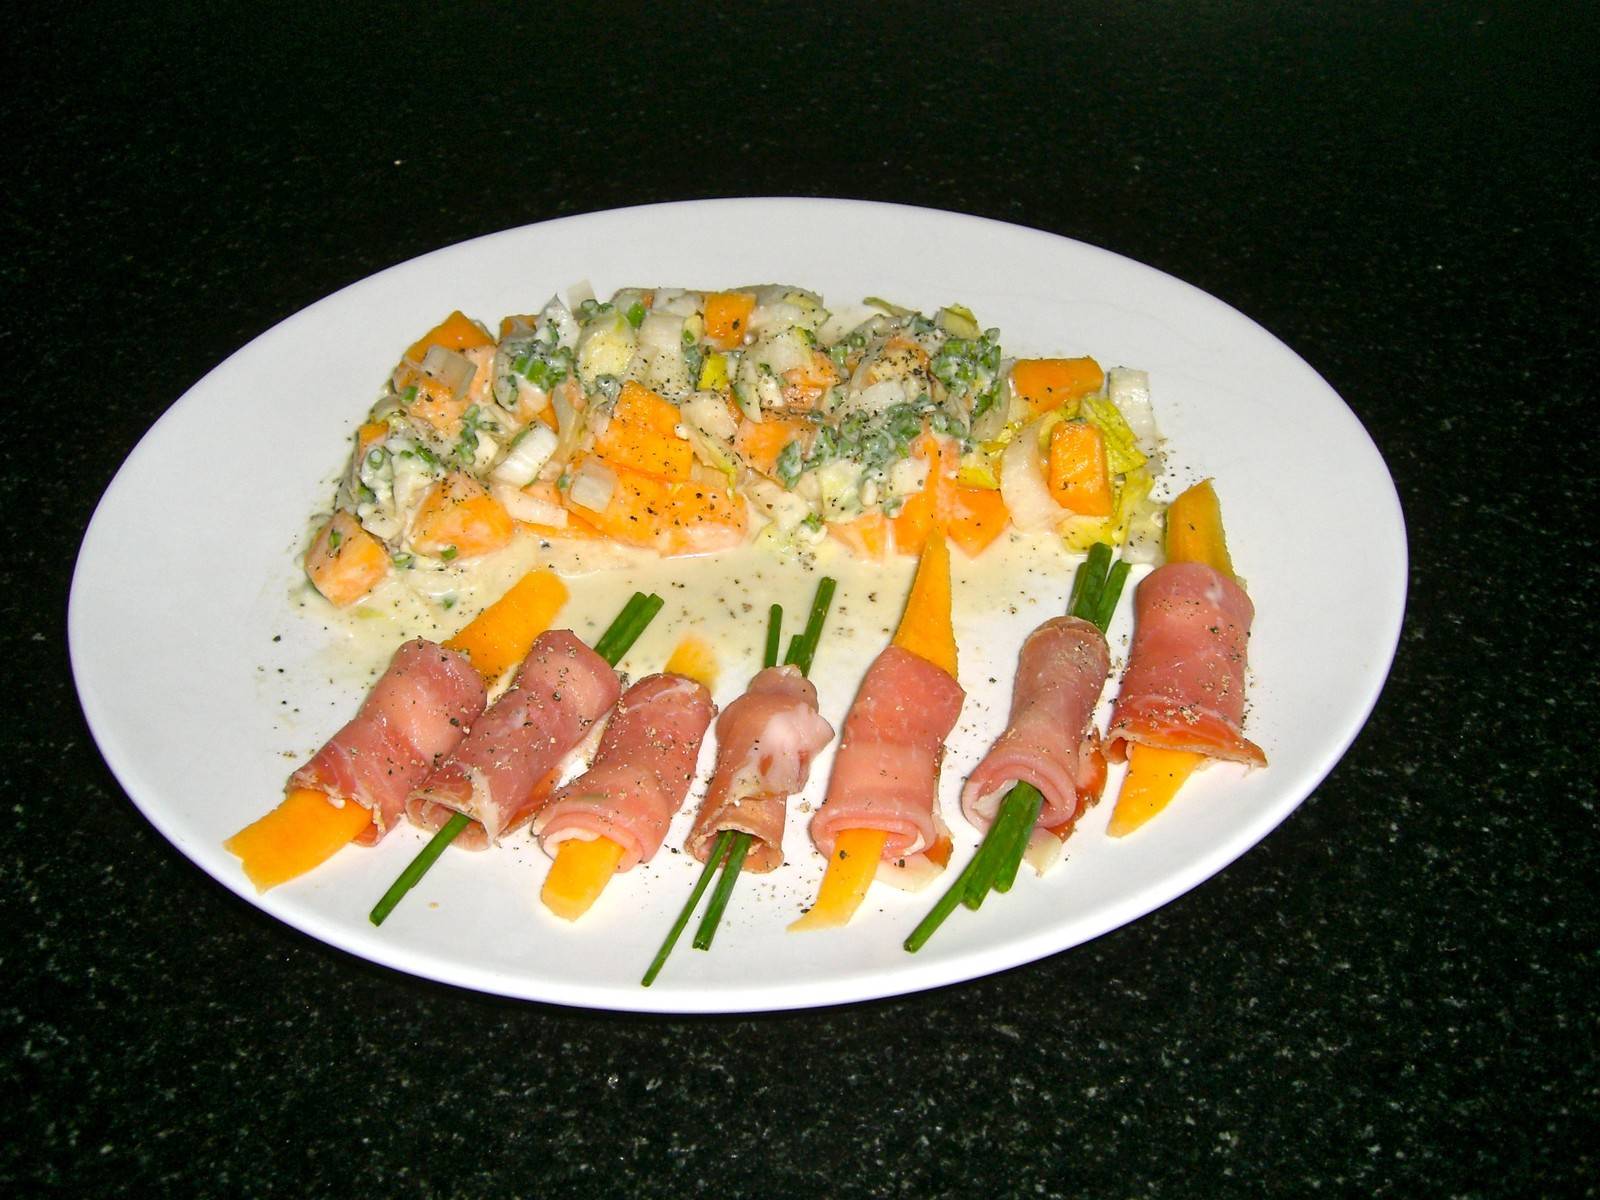 Chicorée-Melonen-Salat mit Roquefort-Dressing